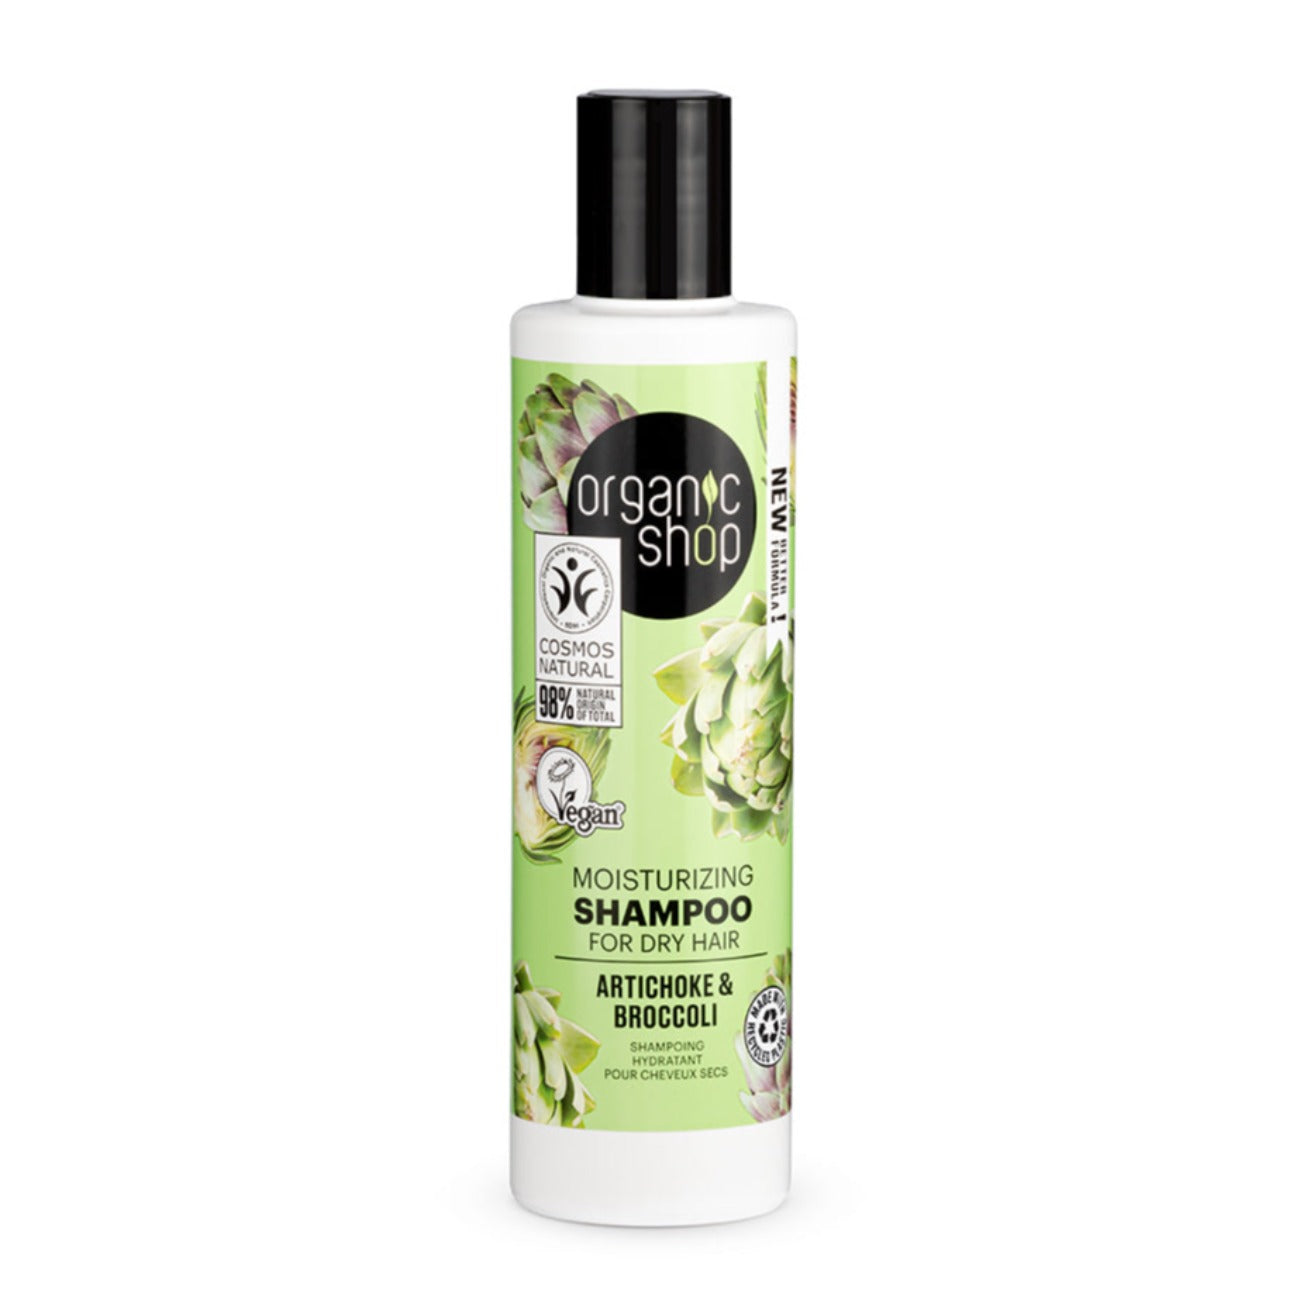 Artichoke and Broccoli Moisturizing Shampoo for Dry Hair 280 ml